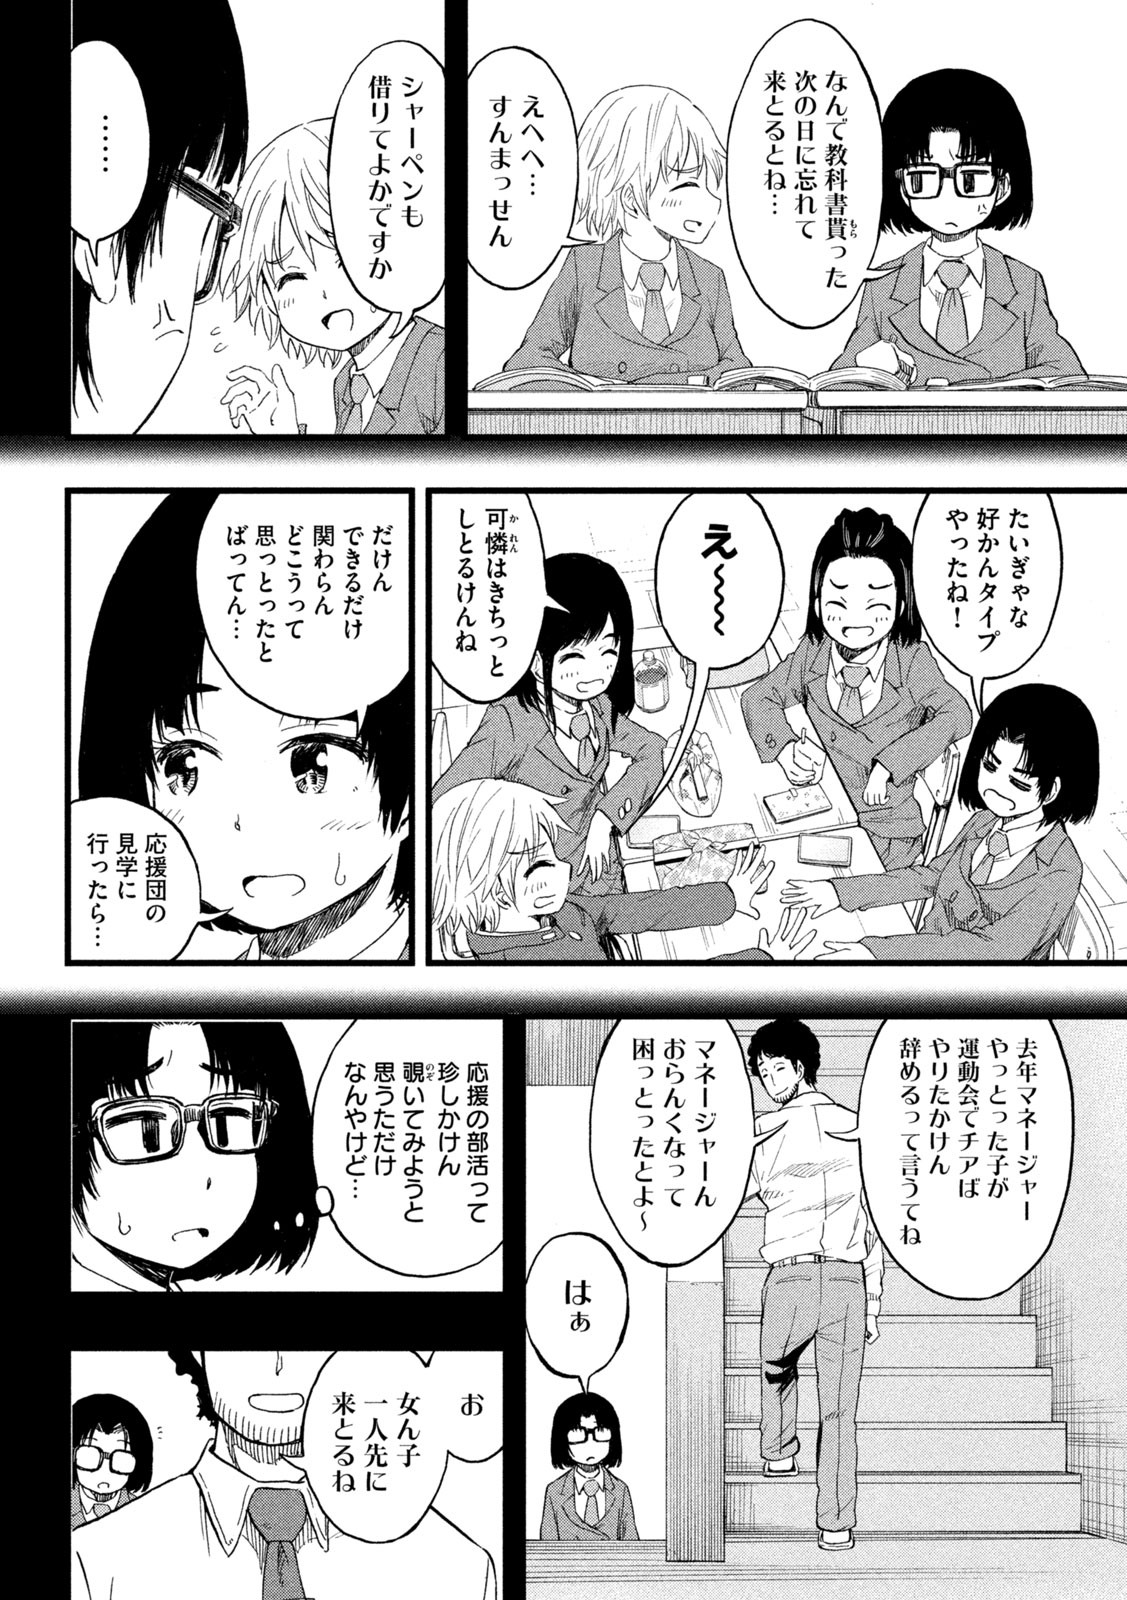 Koharu haru! - Chapter 59 - Page 2